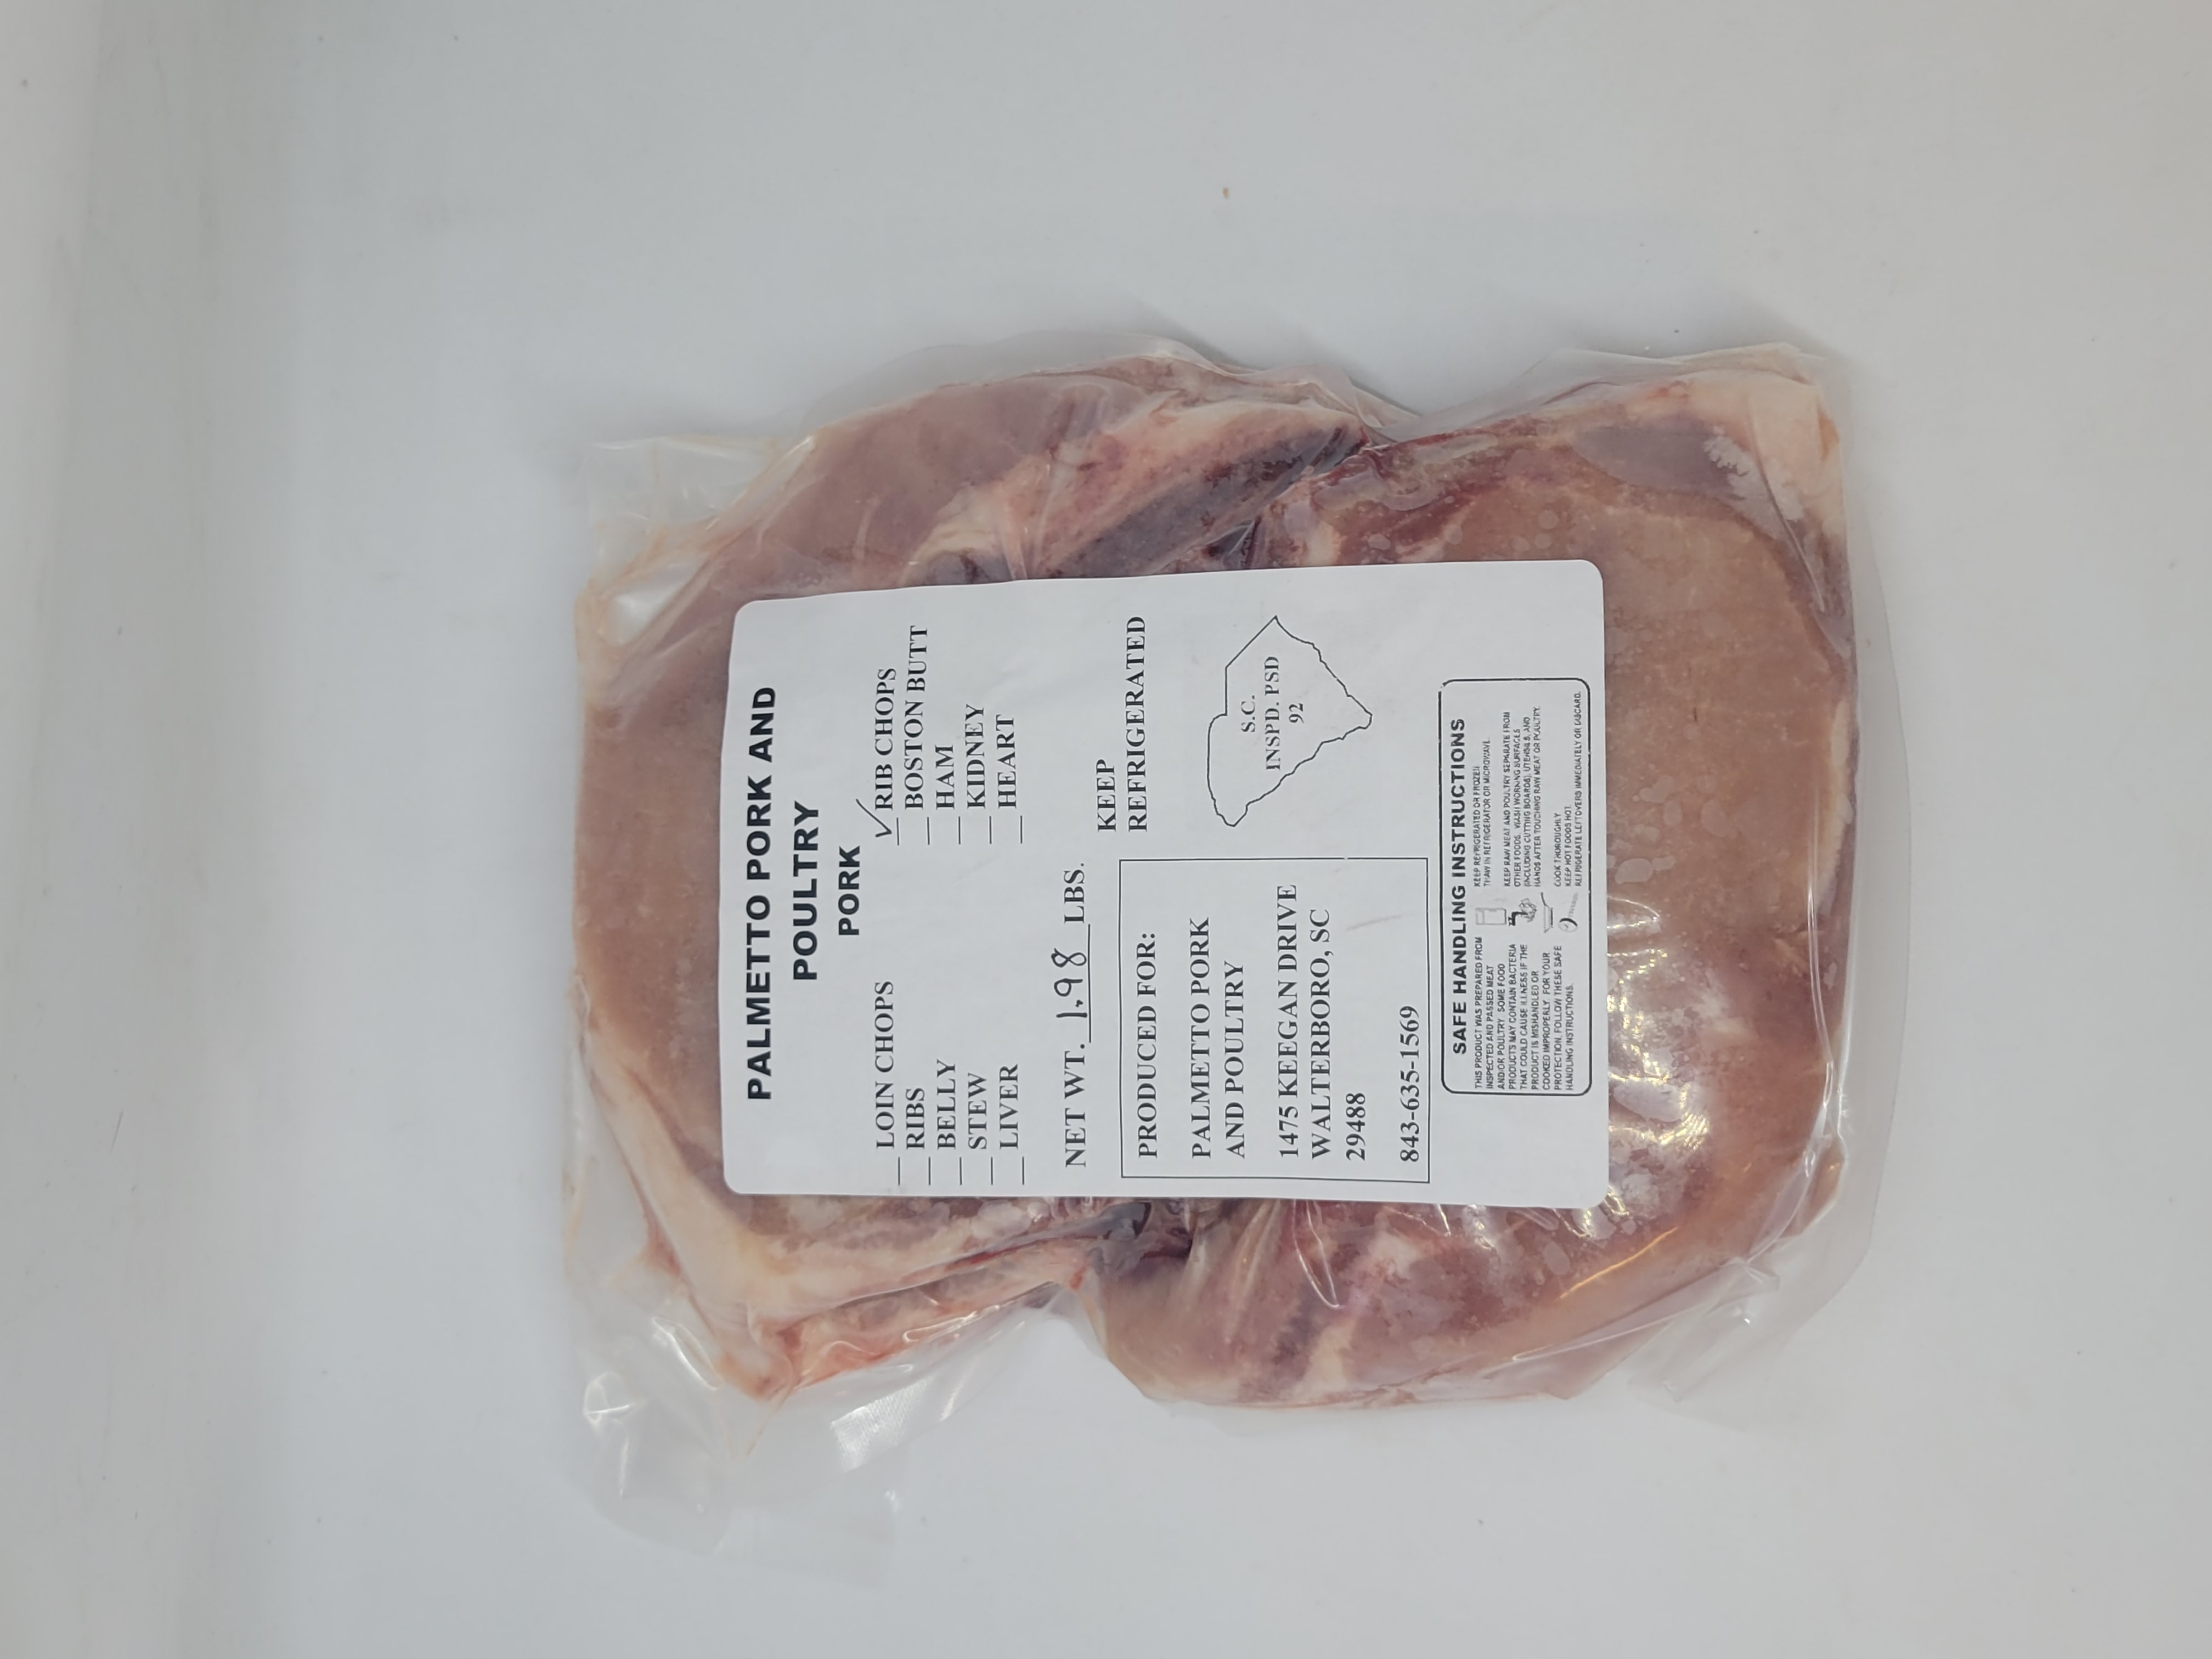 image of (PALMETTO Brand) Thin Cut Boneless Pork Chops